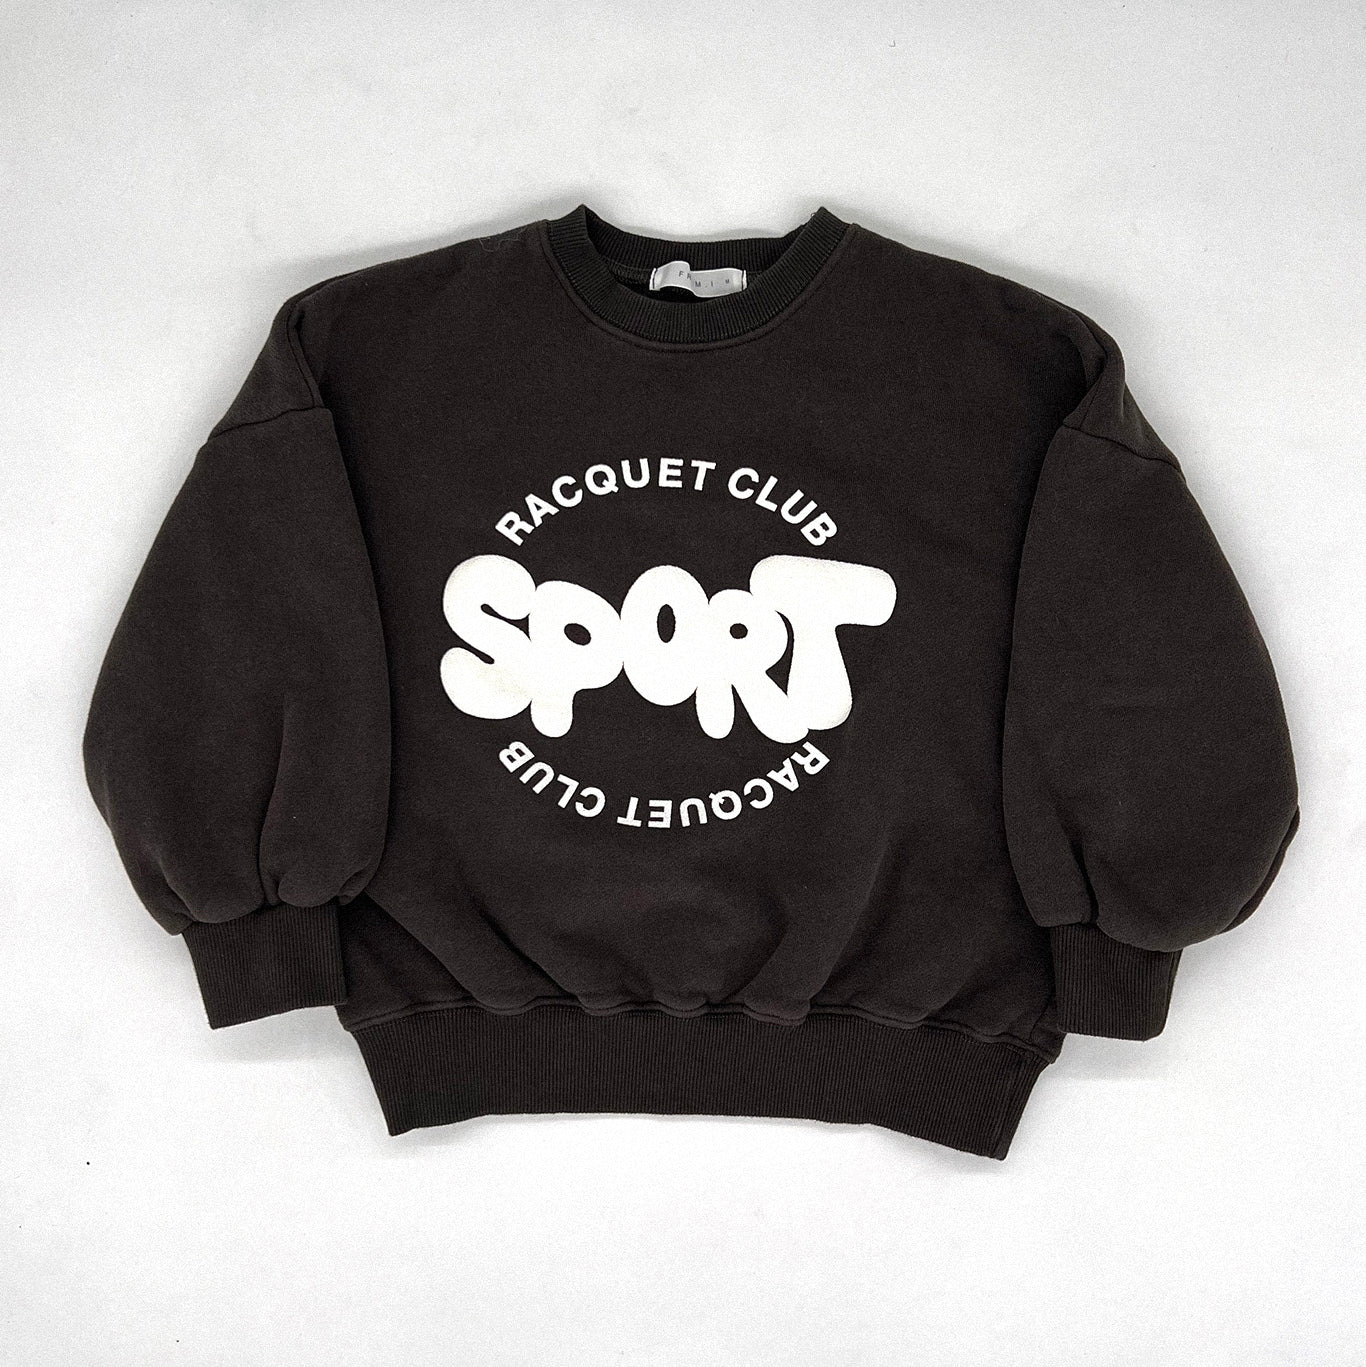 Sports Sweatshirt